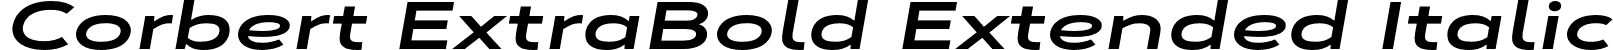 Corbert ExtraBold Extended Italic font - CorbertExtended-ExtraBoldItalic.otf